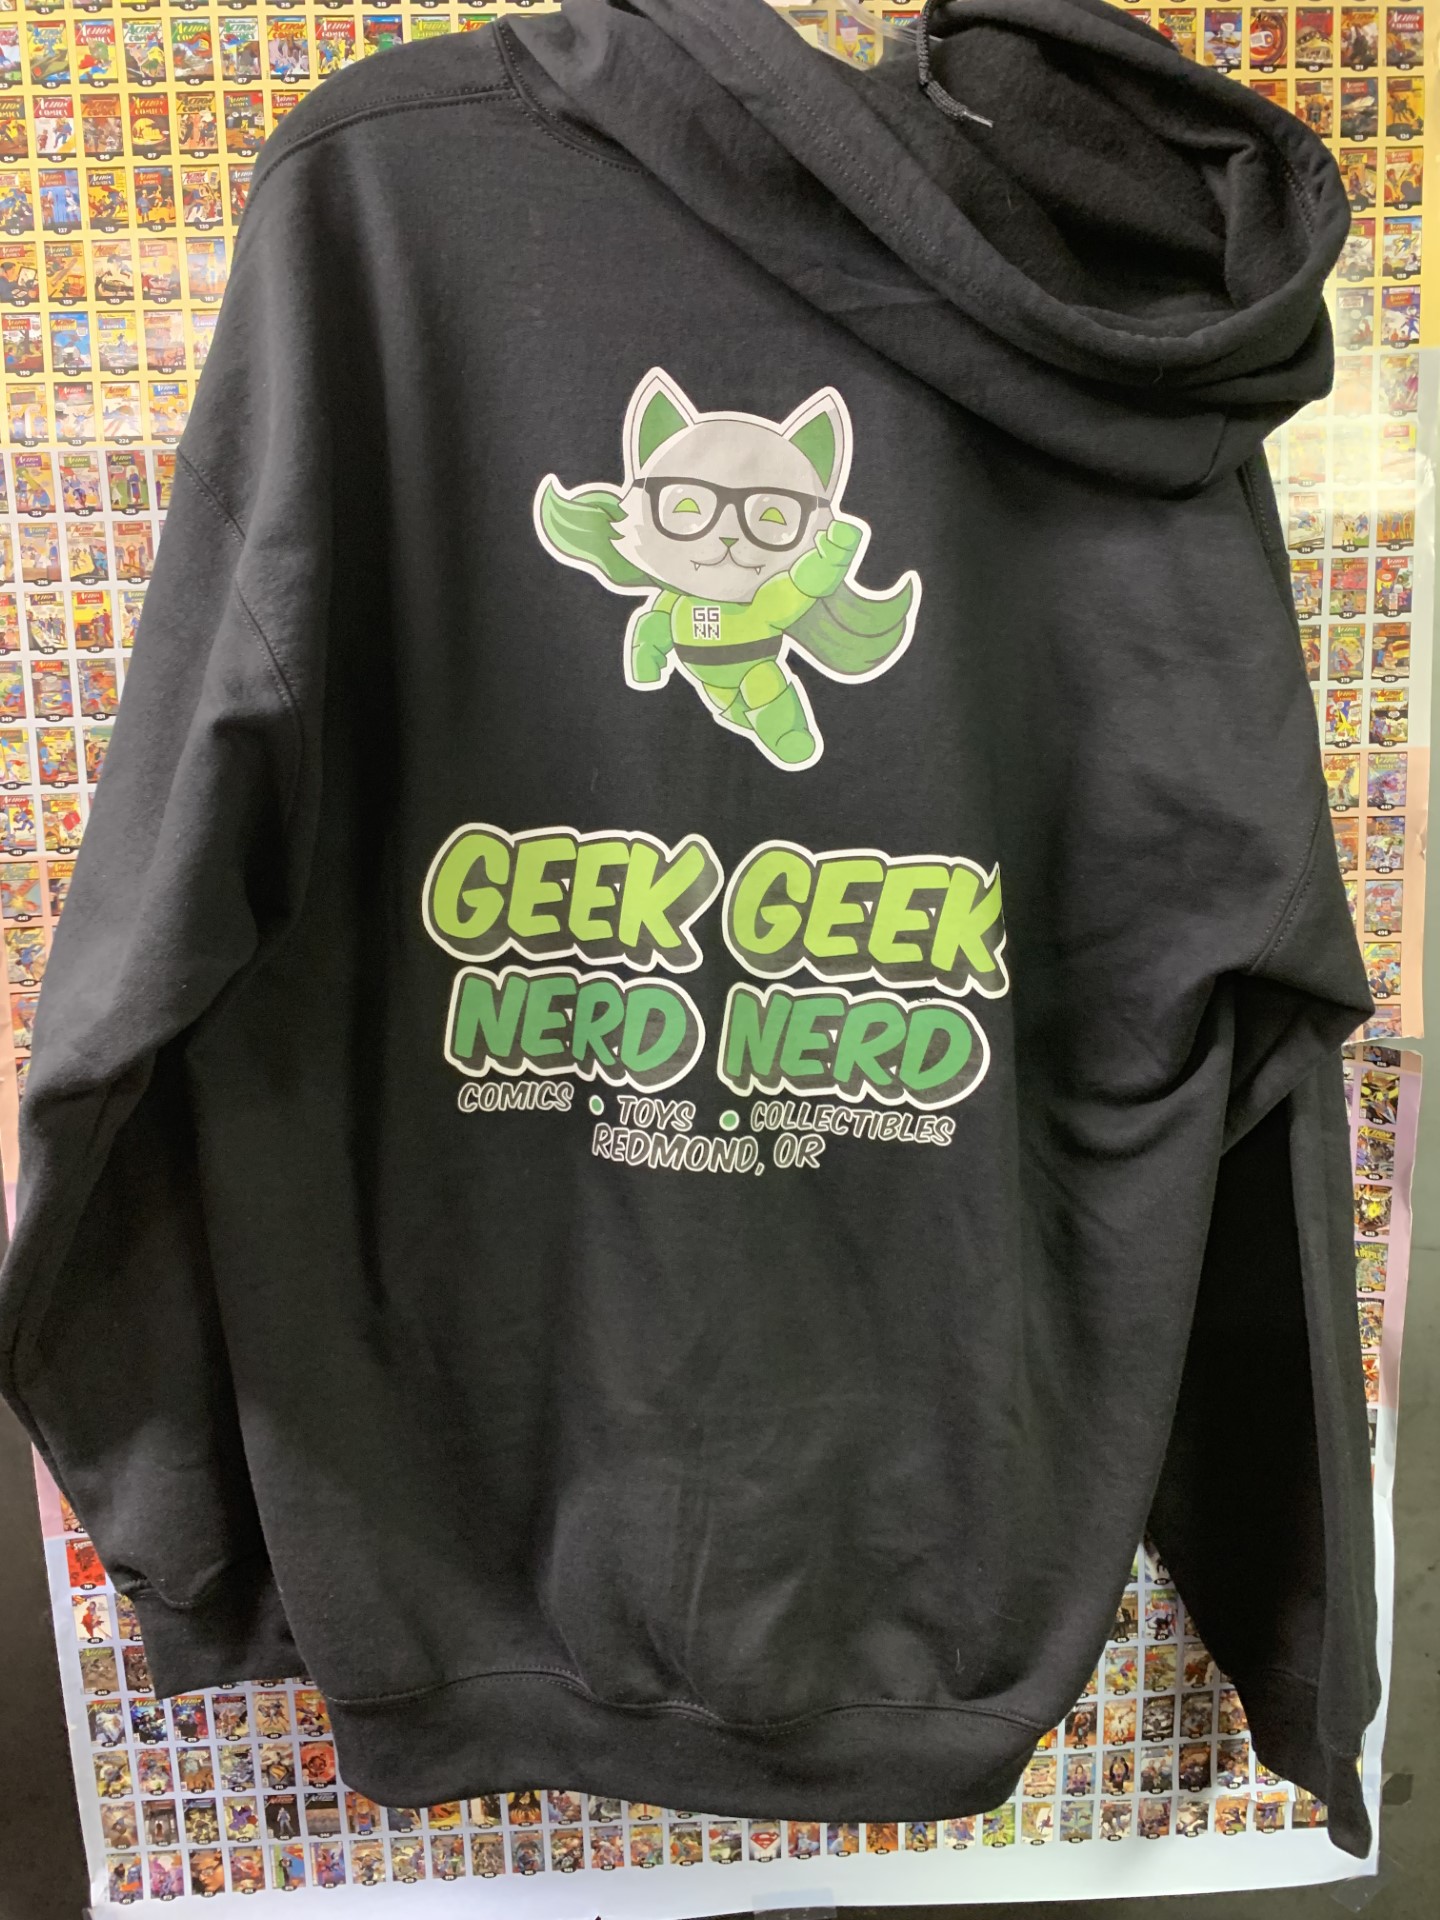 Geek Geek Nerd Nerd Sweatshirt Full Zip Up Black Extra Large